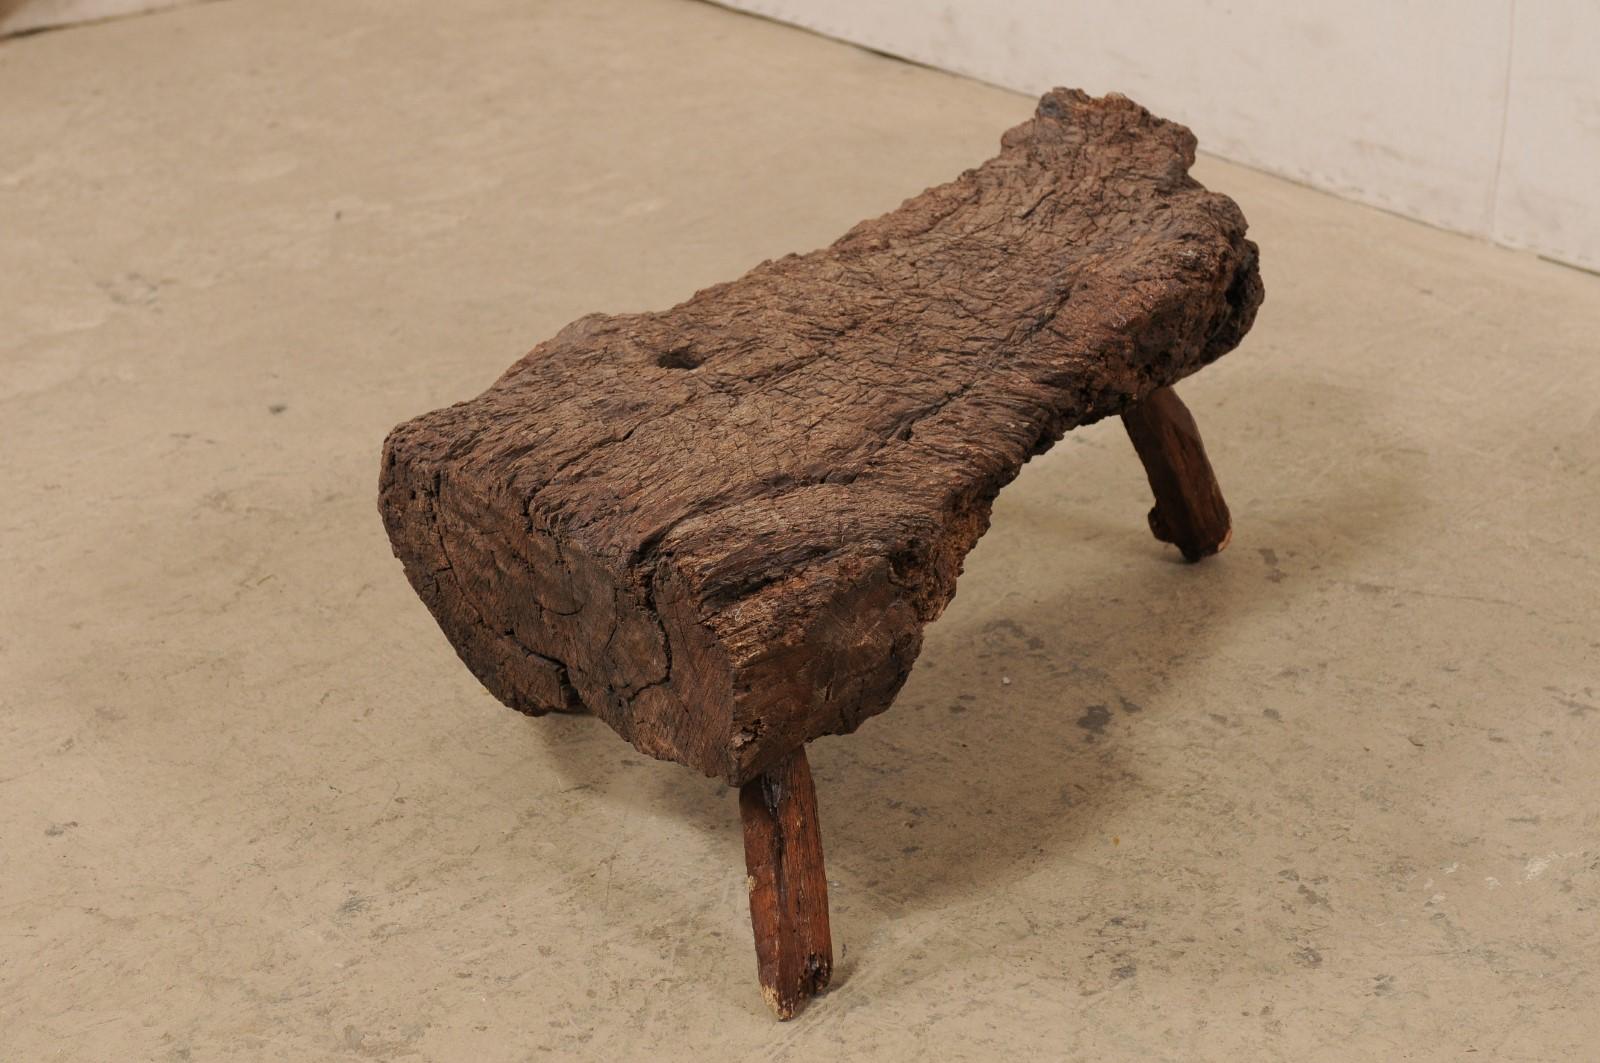 Spanish Petite-Sized Knobby Live-Edge Burl Wood Table or Stool on Limb Legs 3